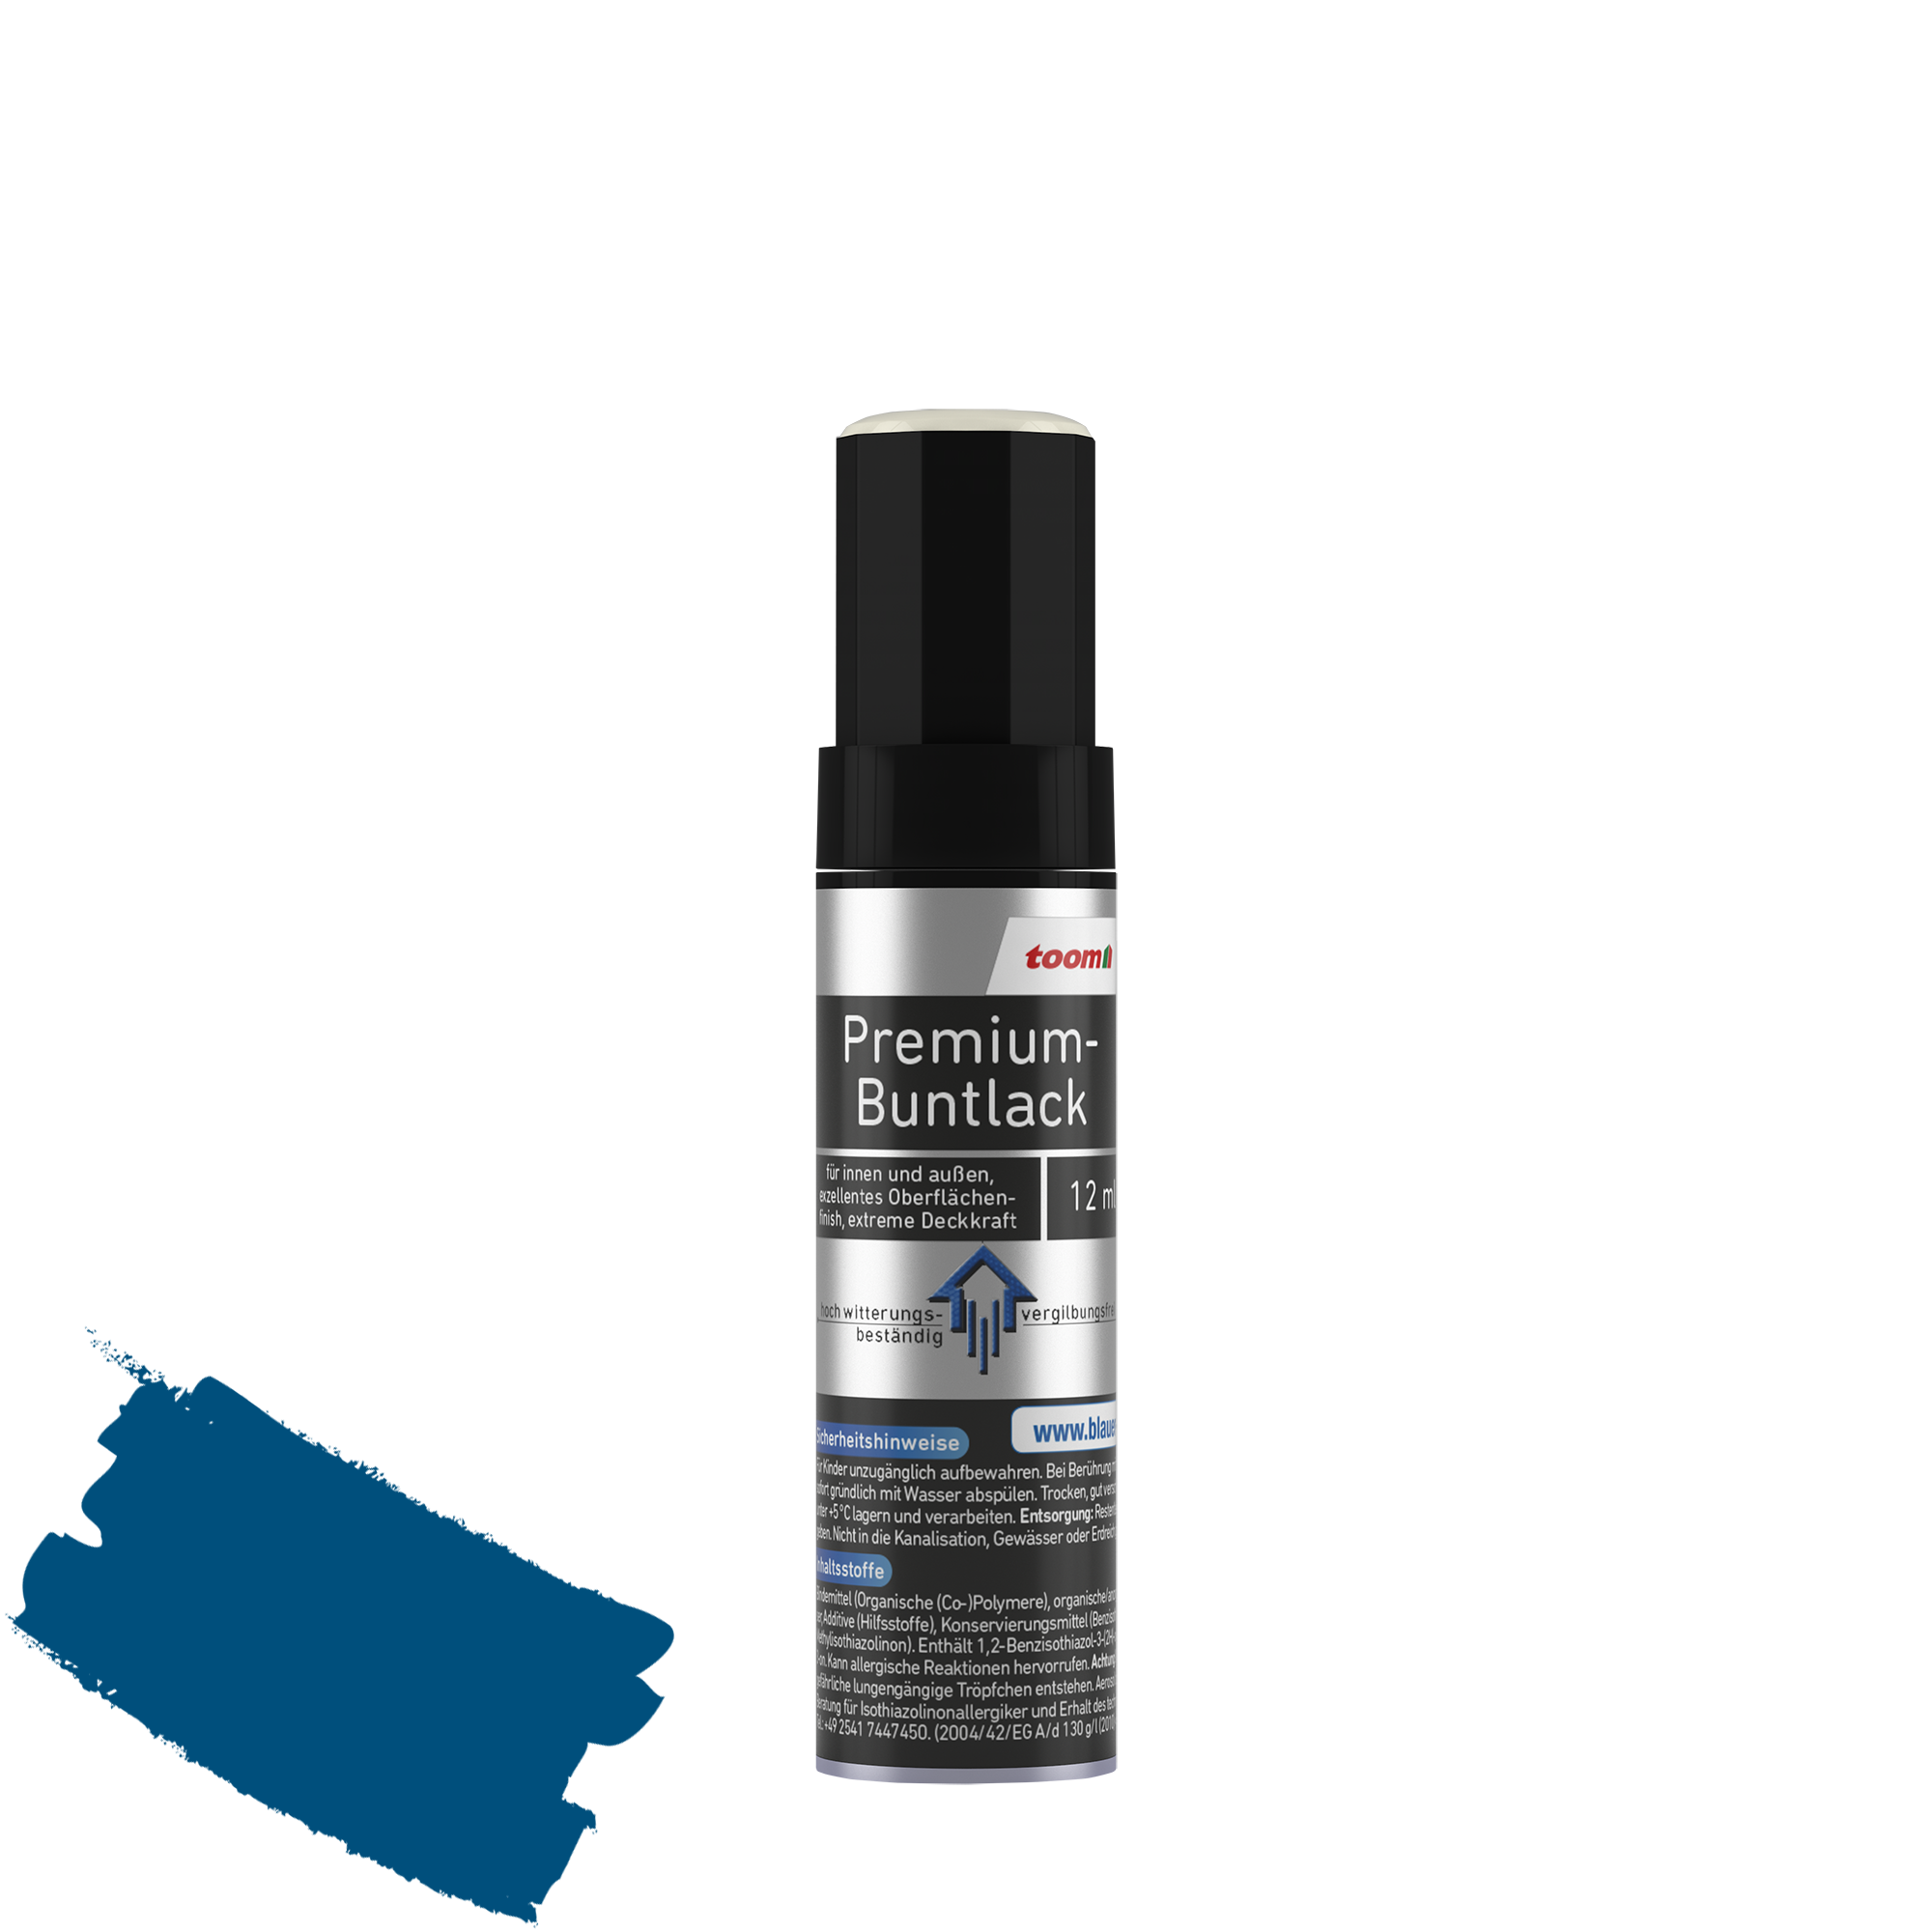 Premium-Buntlackstift enzianblau glänzend 12 ml + product picture